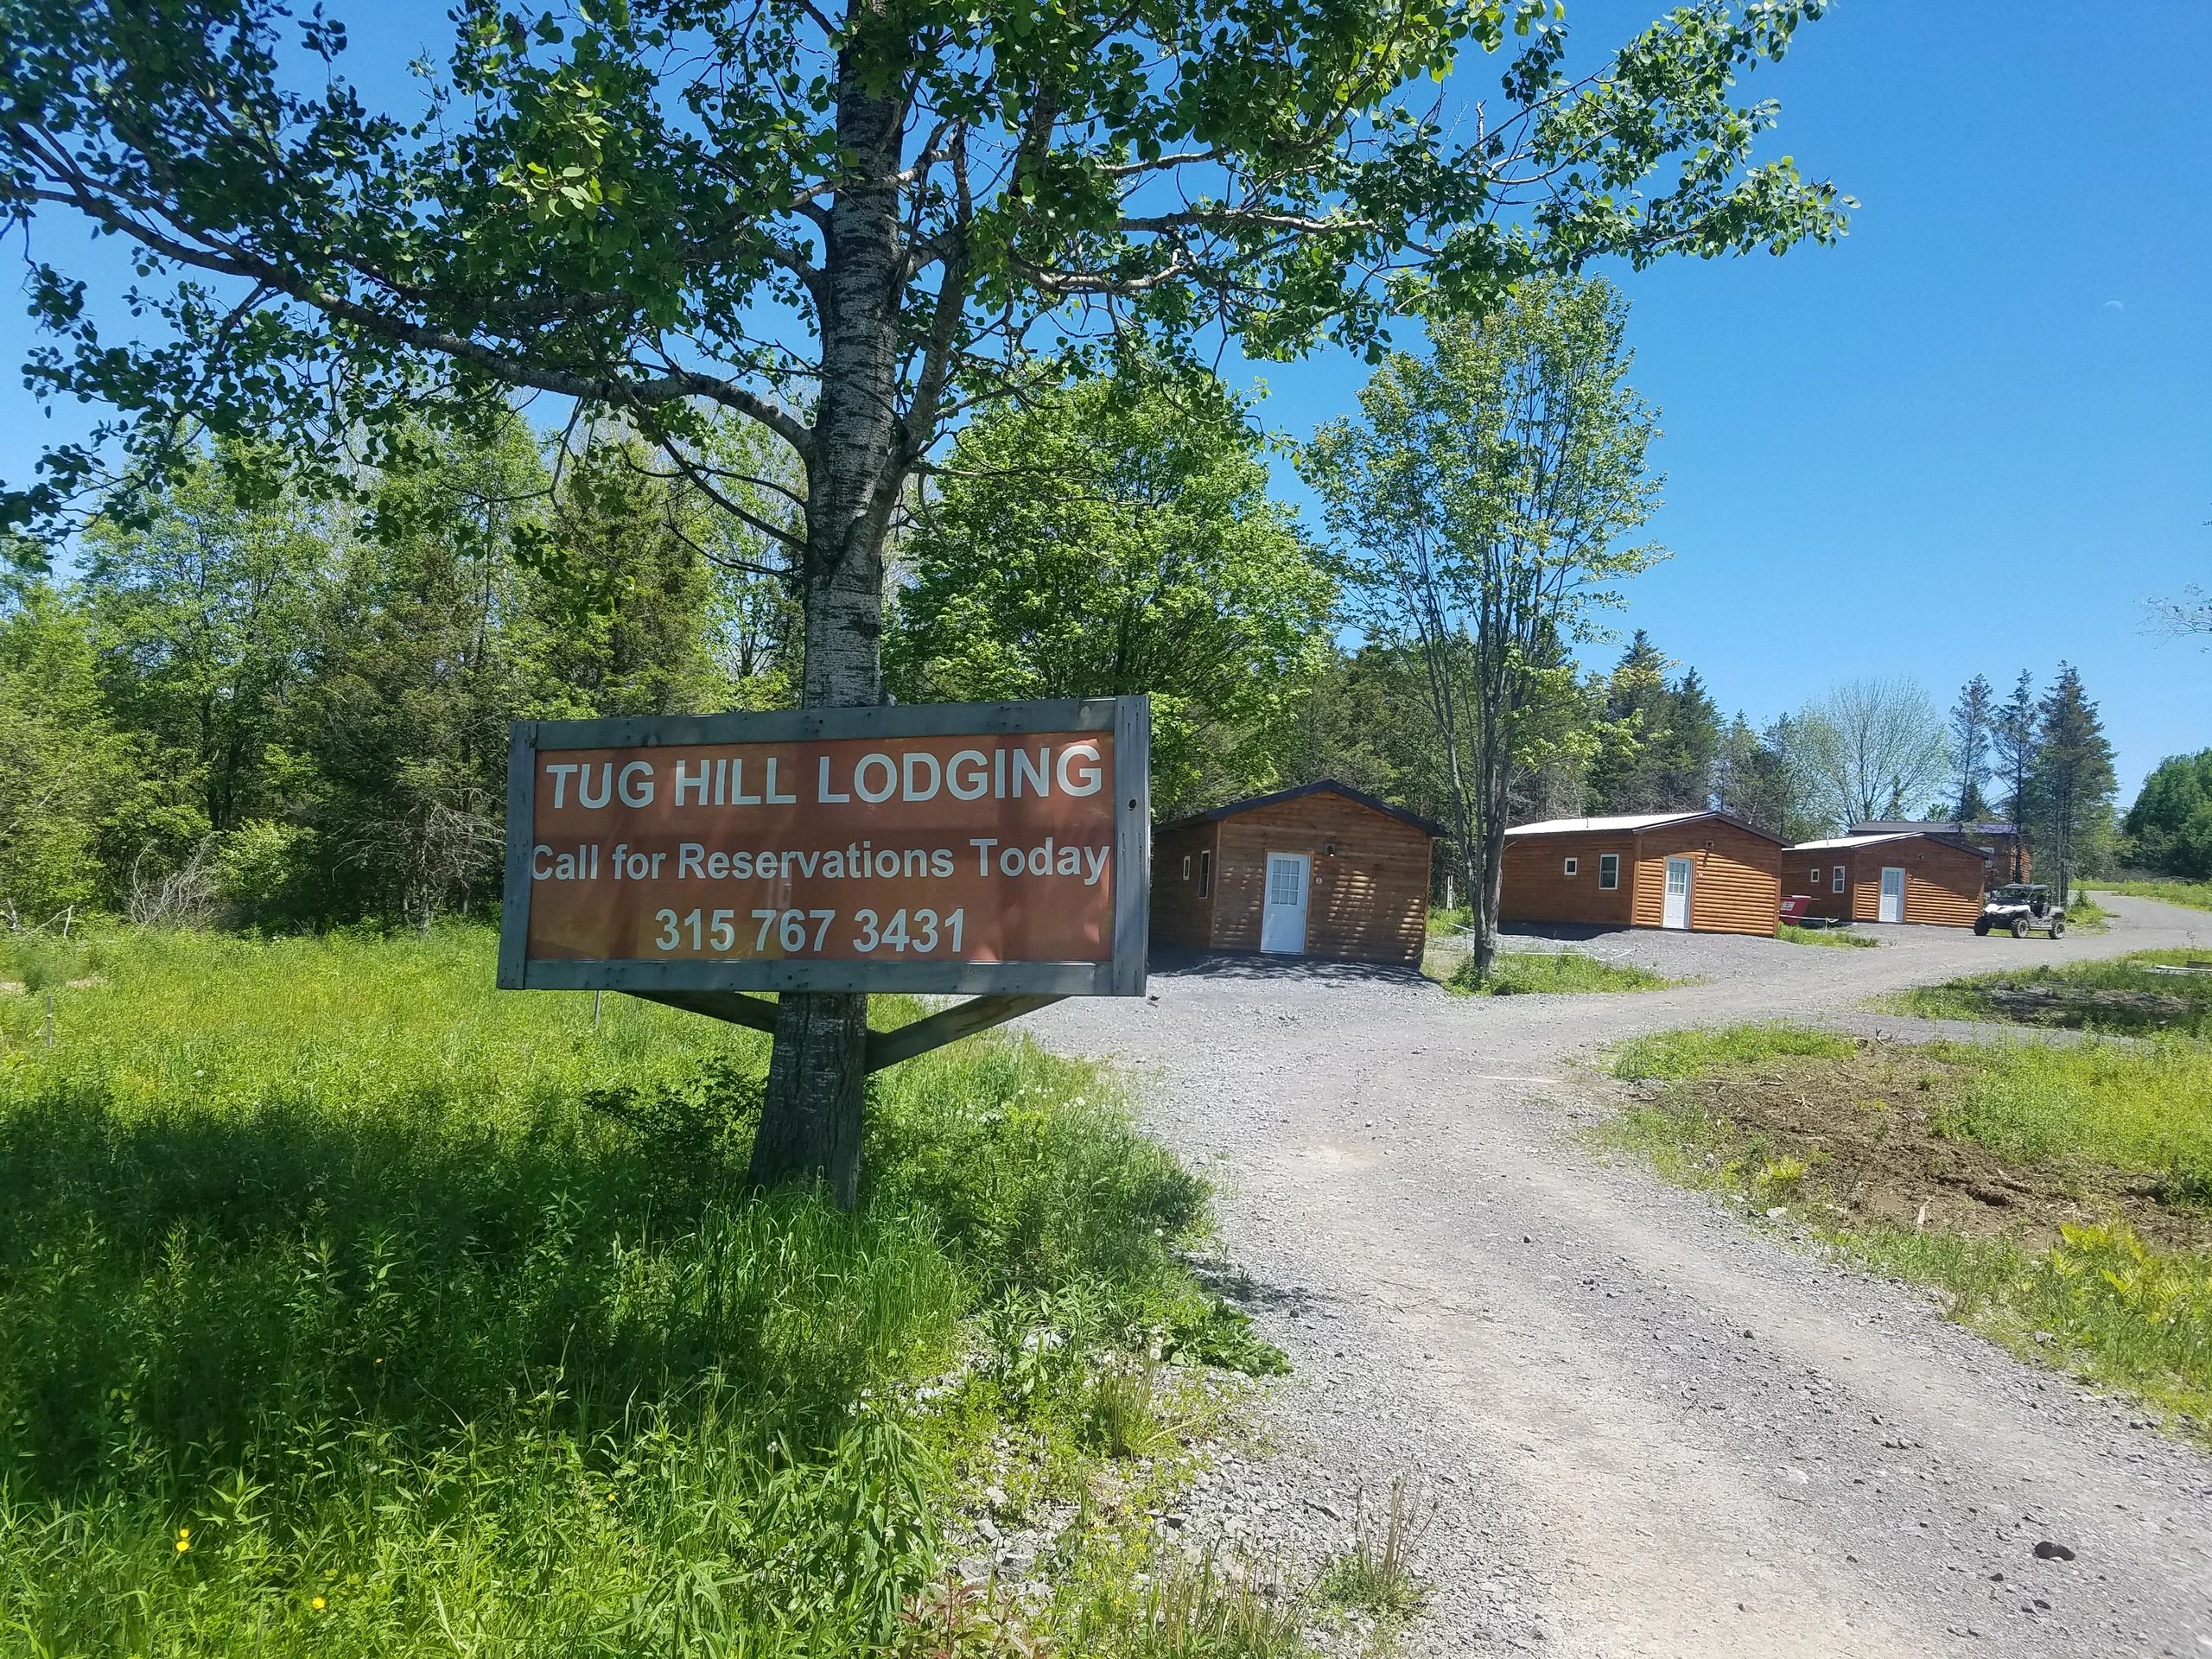 Tug hill lodging